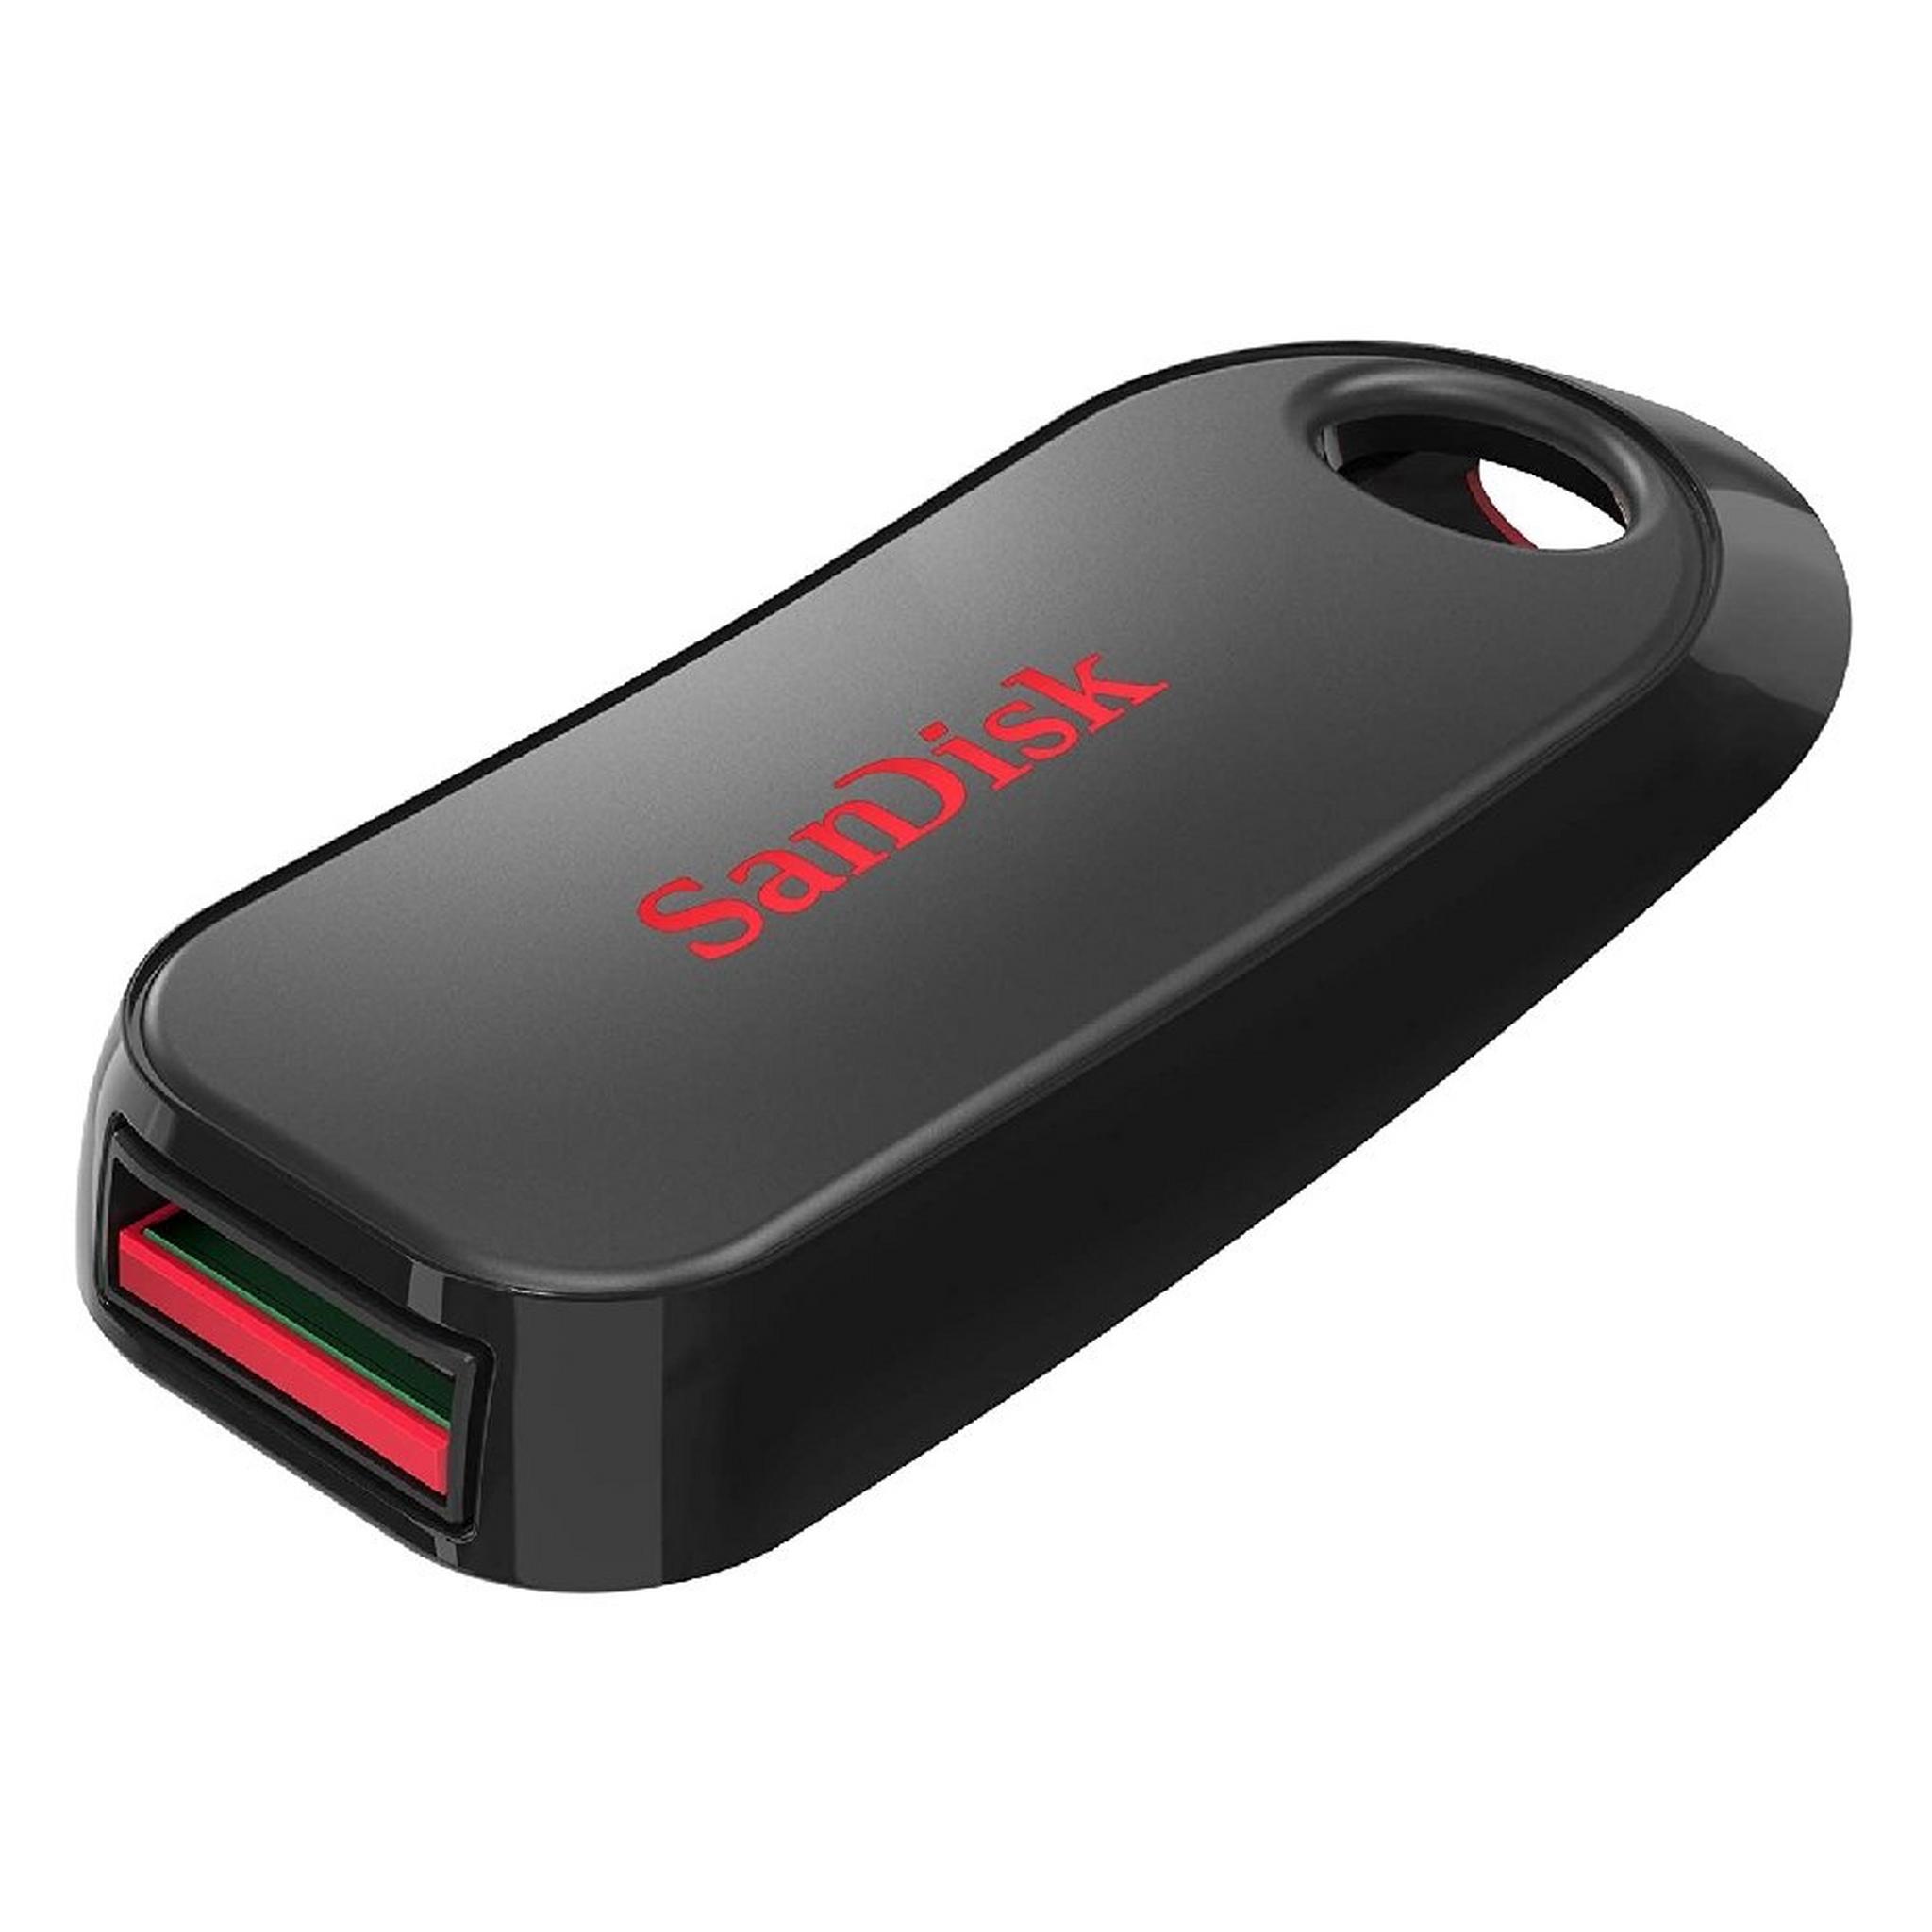 SanDisk Cruzer Flash Drive 64GB Black USB 2.0